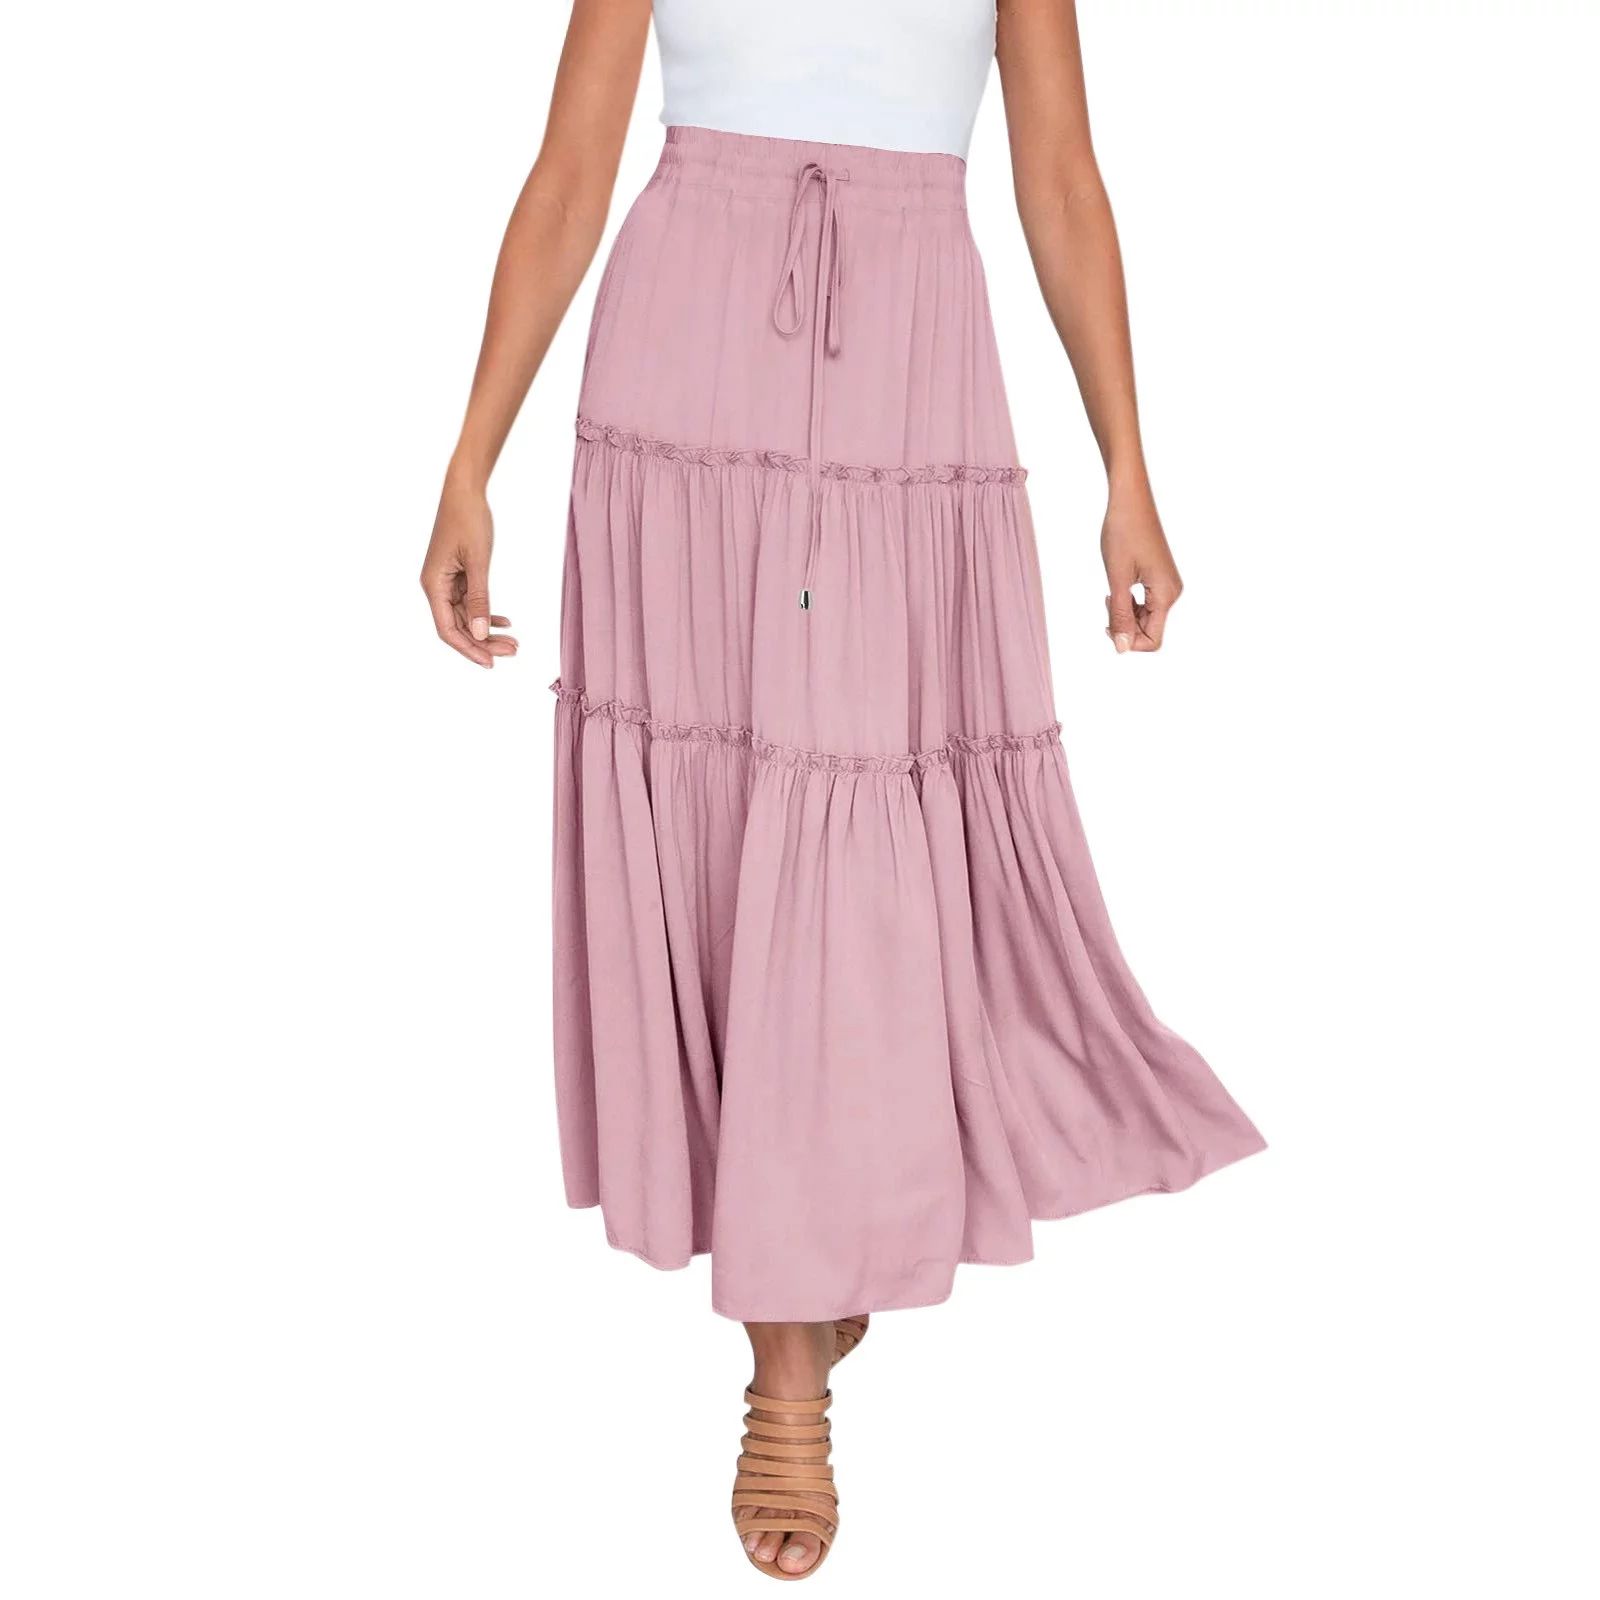 Fsqjgq Skirts for Women Preppy Vintage Skirt Women’S Elastic High Waist Boho Maxi Skirt Ruffle ... | Walmart (US)